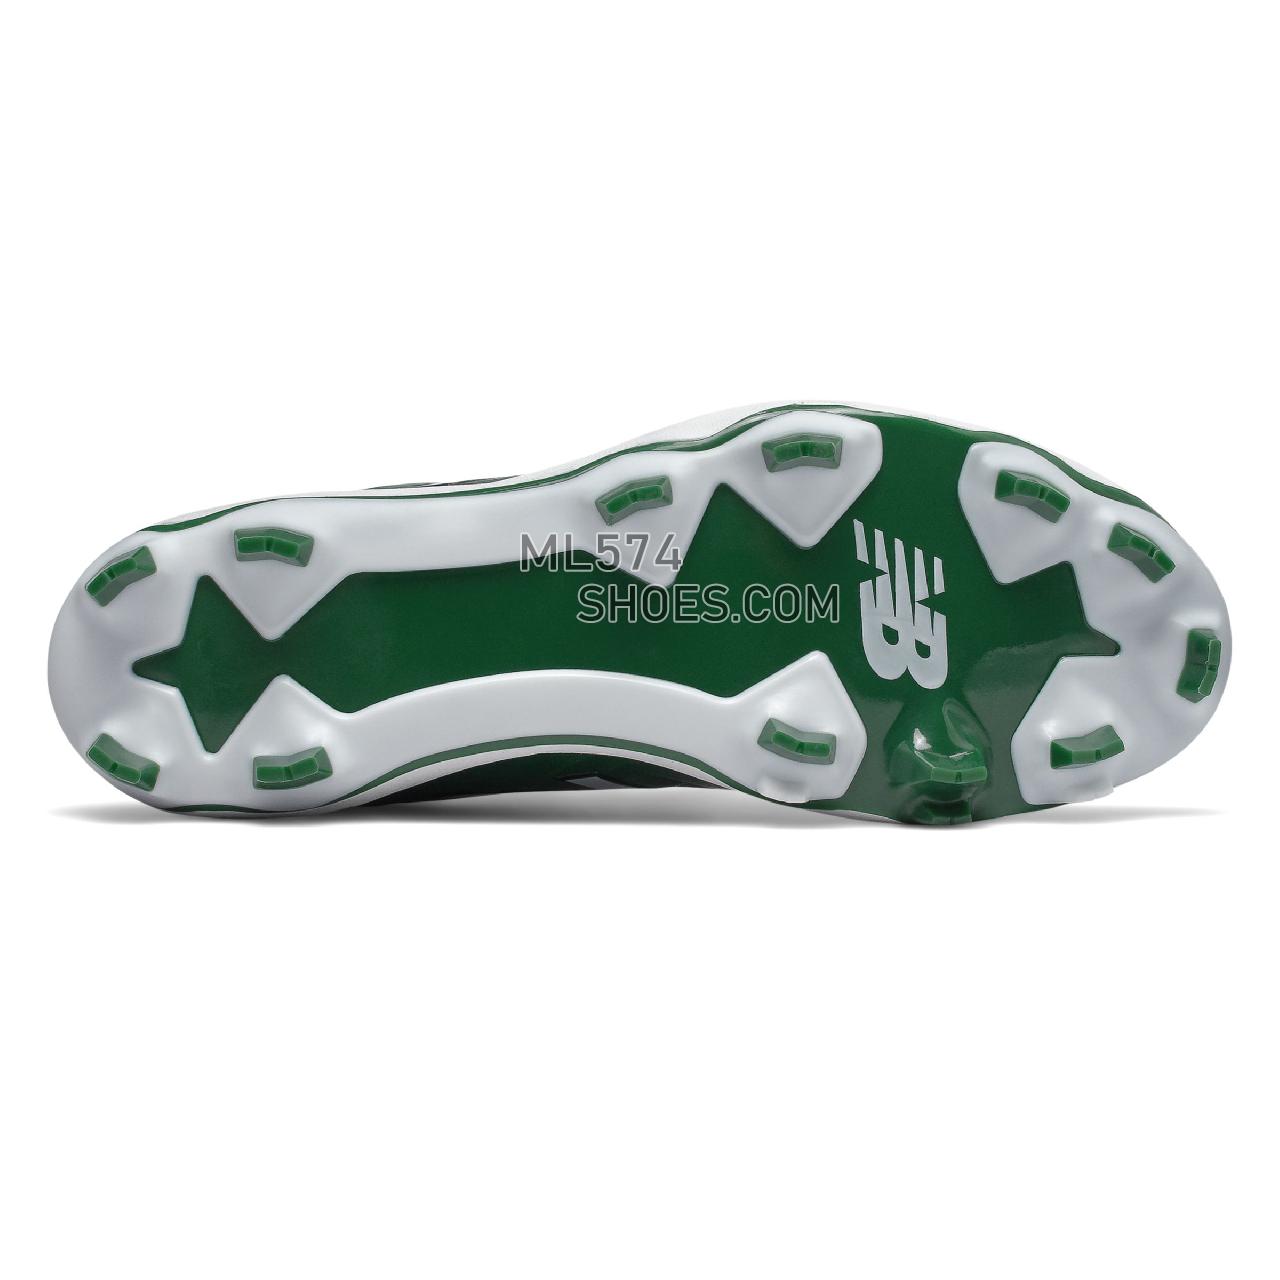 New Balance 4040v5 TPU - Men's Baseball Turf - Green with White - PL4040F5